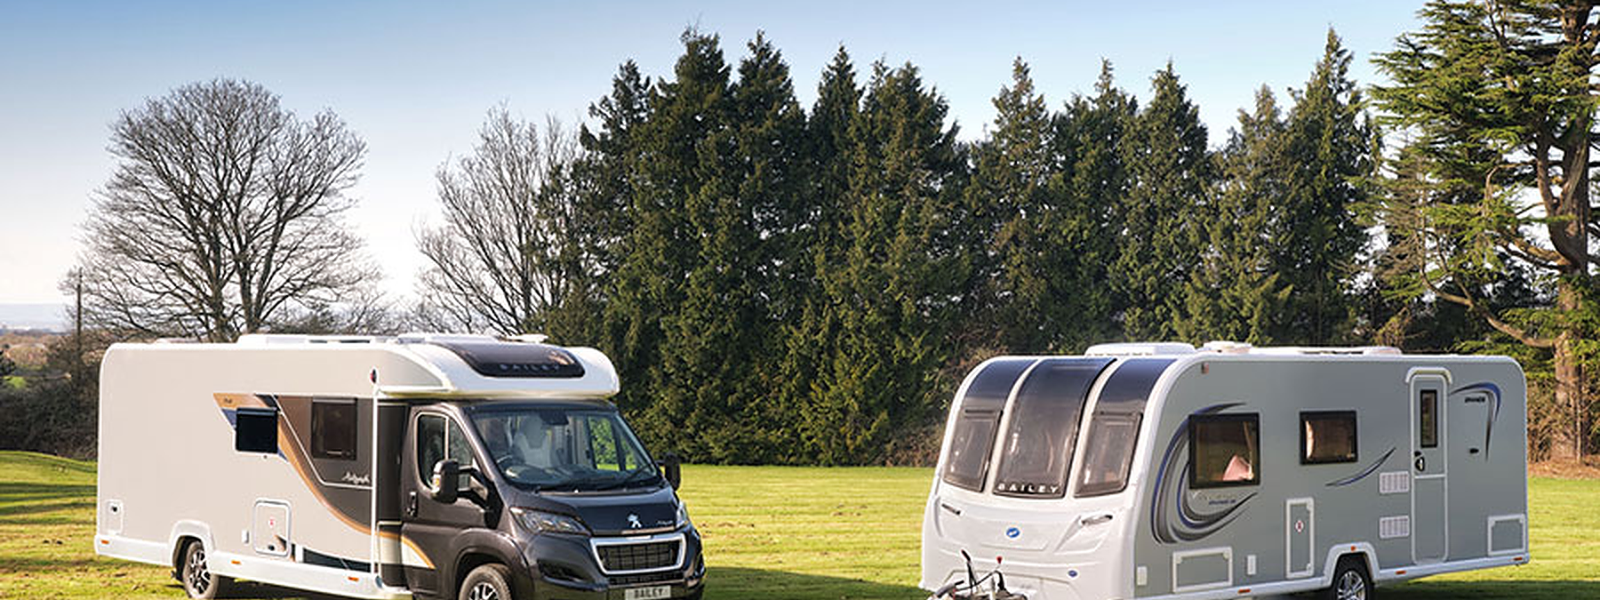 RAPIJATA OÜ - Caravan parking lots, Accommodation in Estonia, Organisation of seminars, Accommodation, camping for carava...